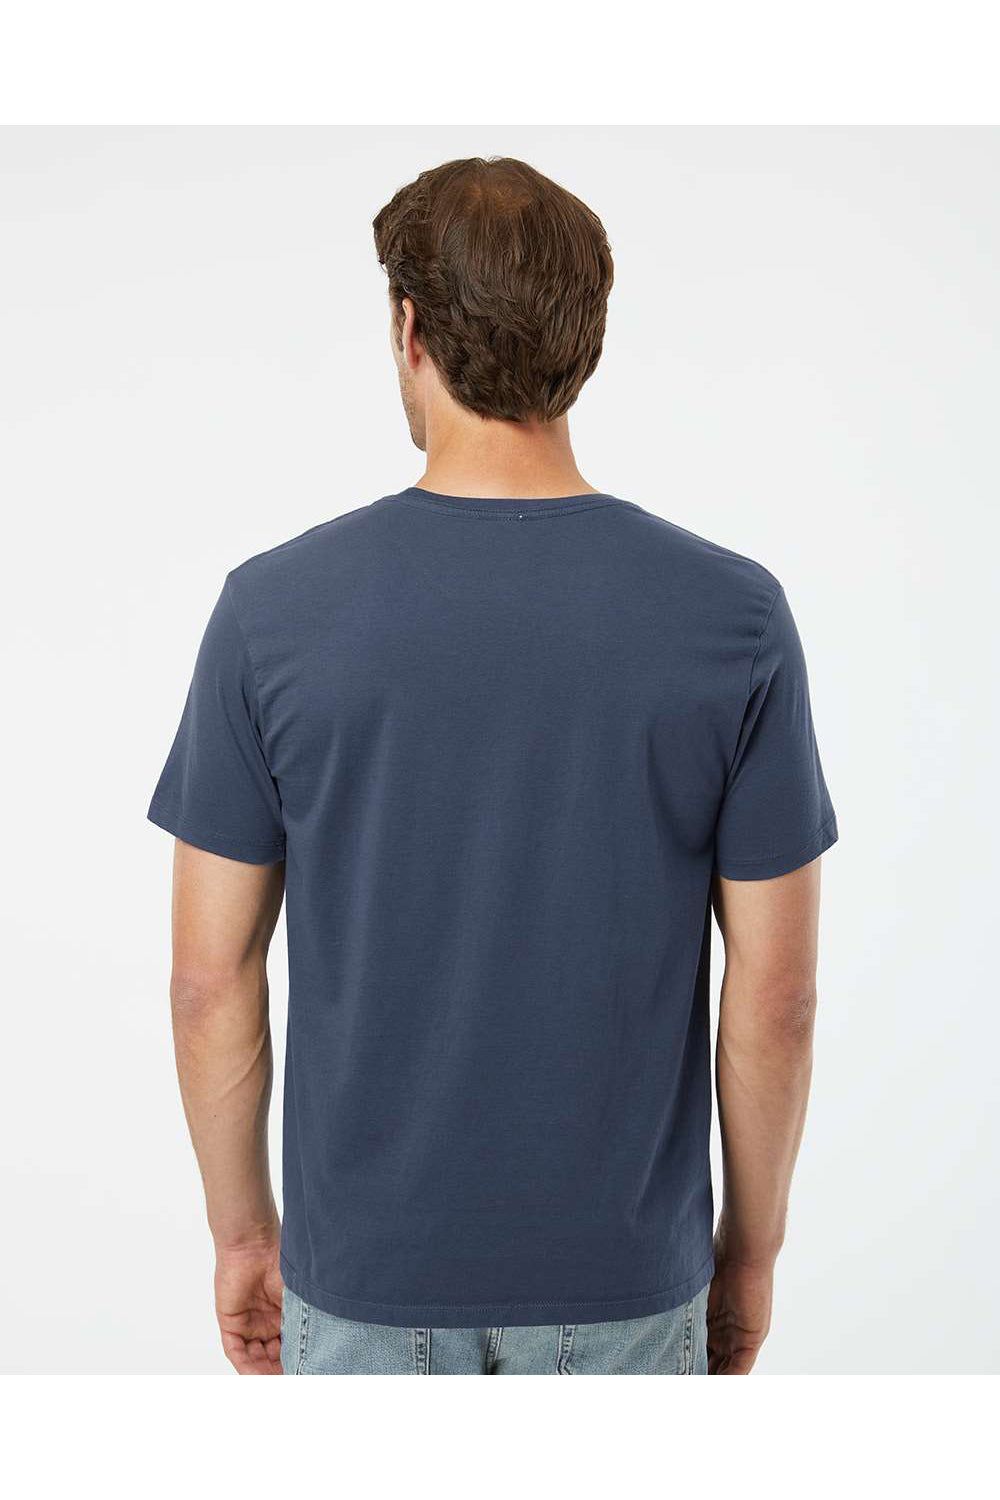 SoftShirts 400 Mens Organic Short Sleeve Crewneck T-Shirt Navy Blue Model Back